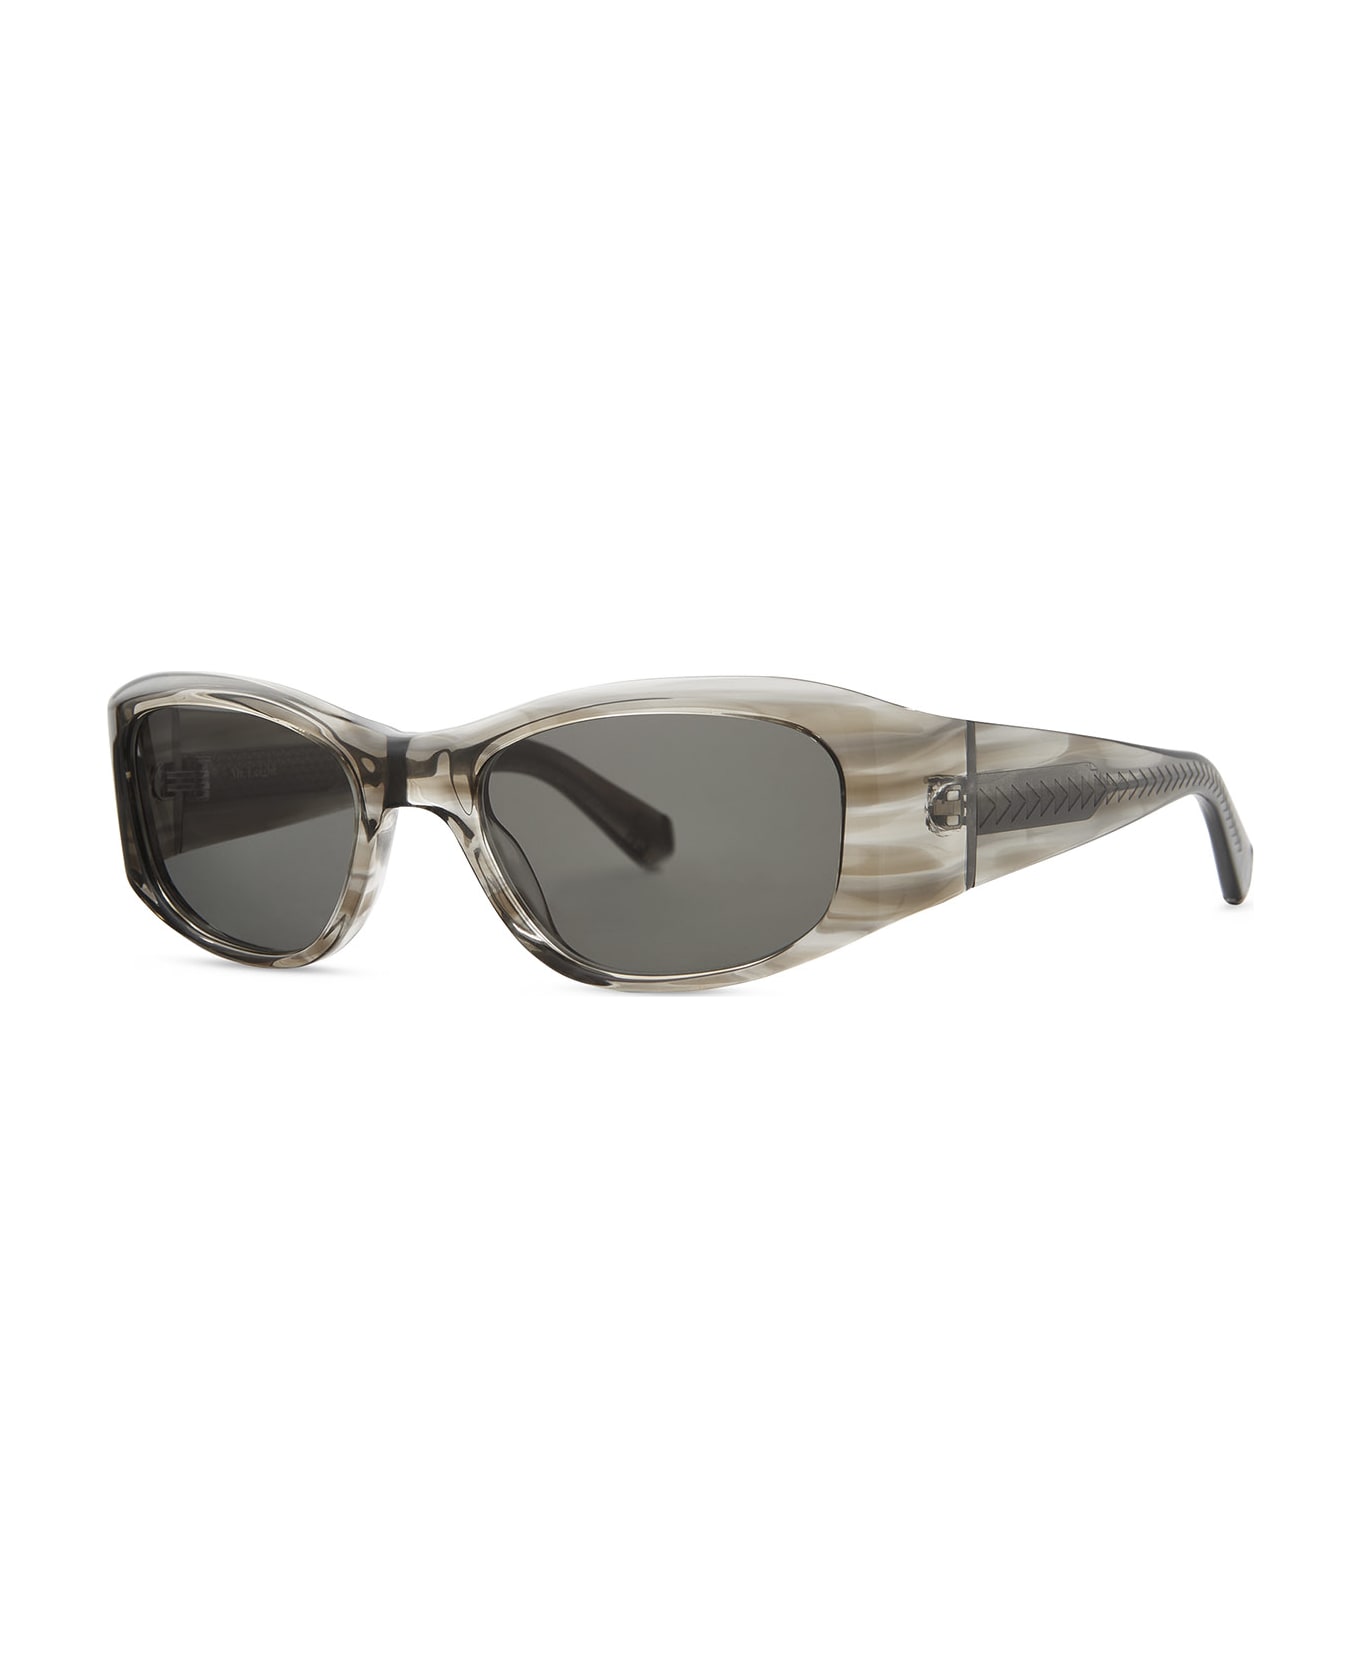 Mr. Leight Aloha Doc S Celestial Grey-pewter Sunglasses - Celestial Grey-Pewter